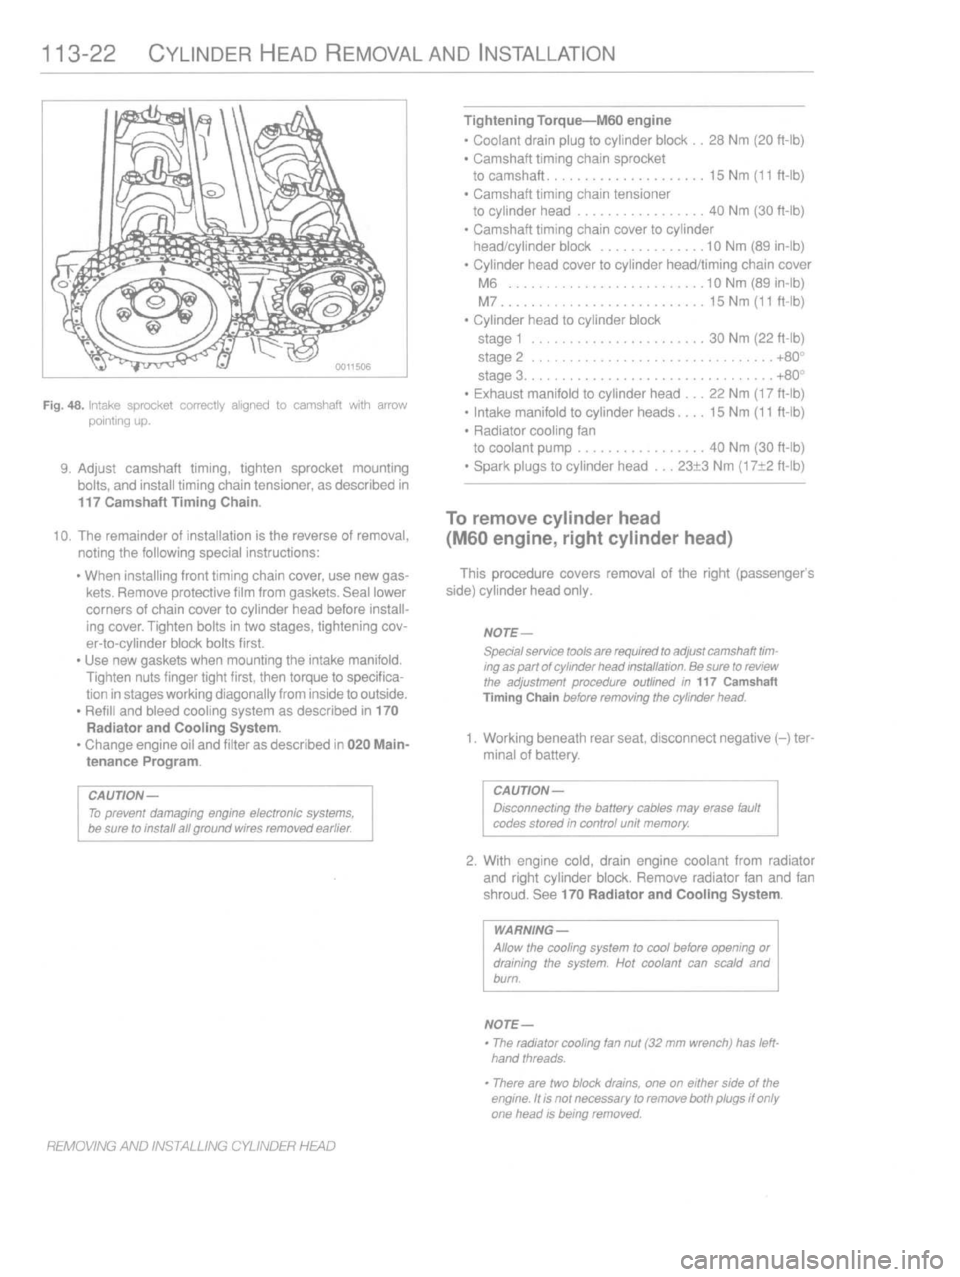 BMW 318i 1993 E36 Owners Manual 